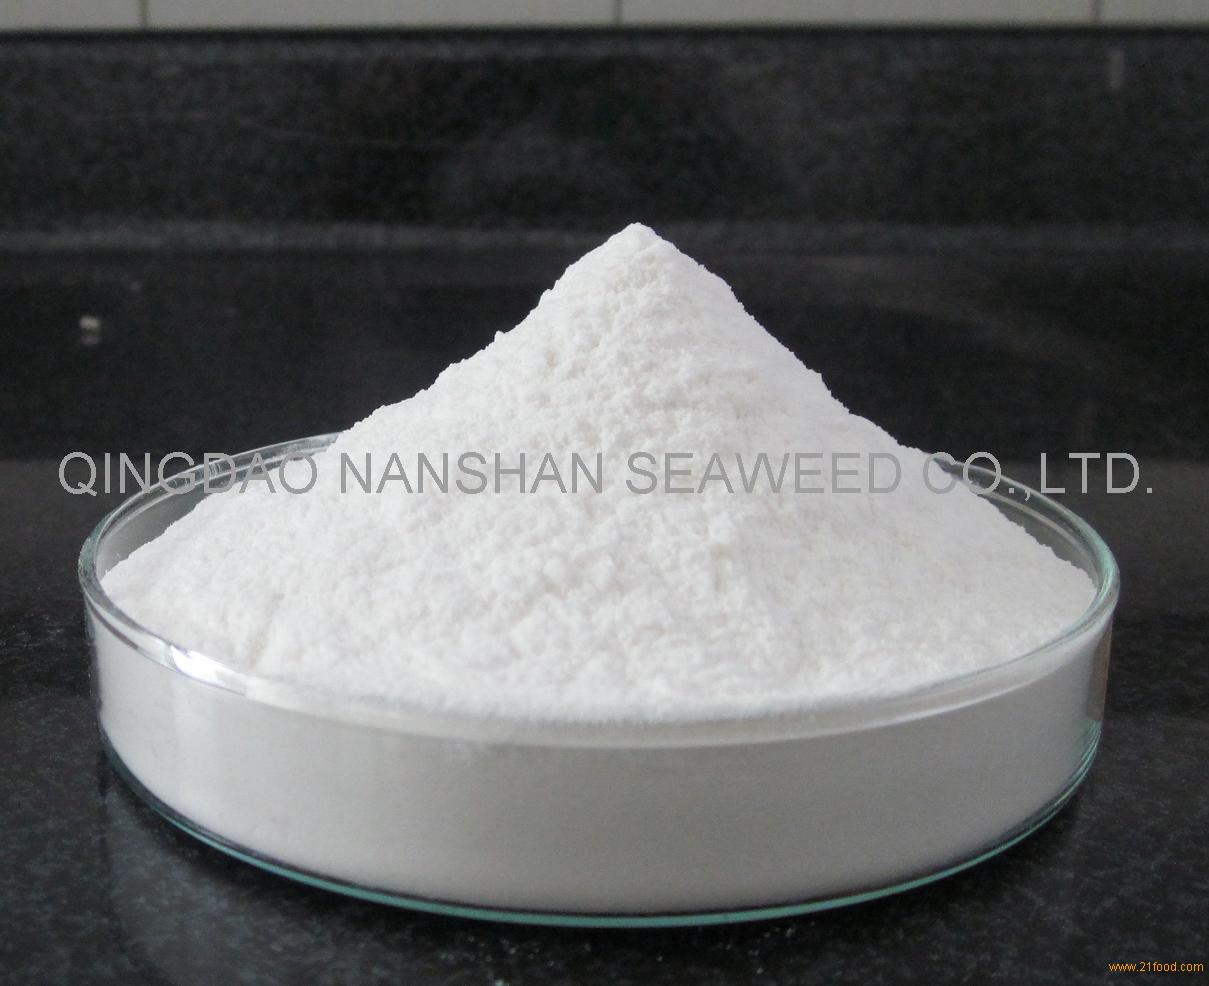 Buy wholesale Sodium alginate (E401) - 50gr